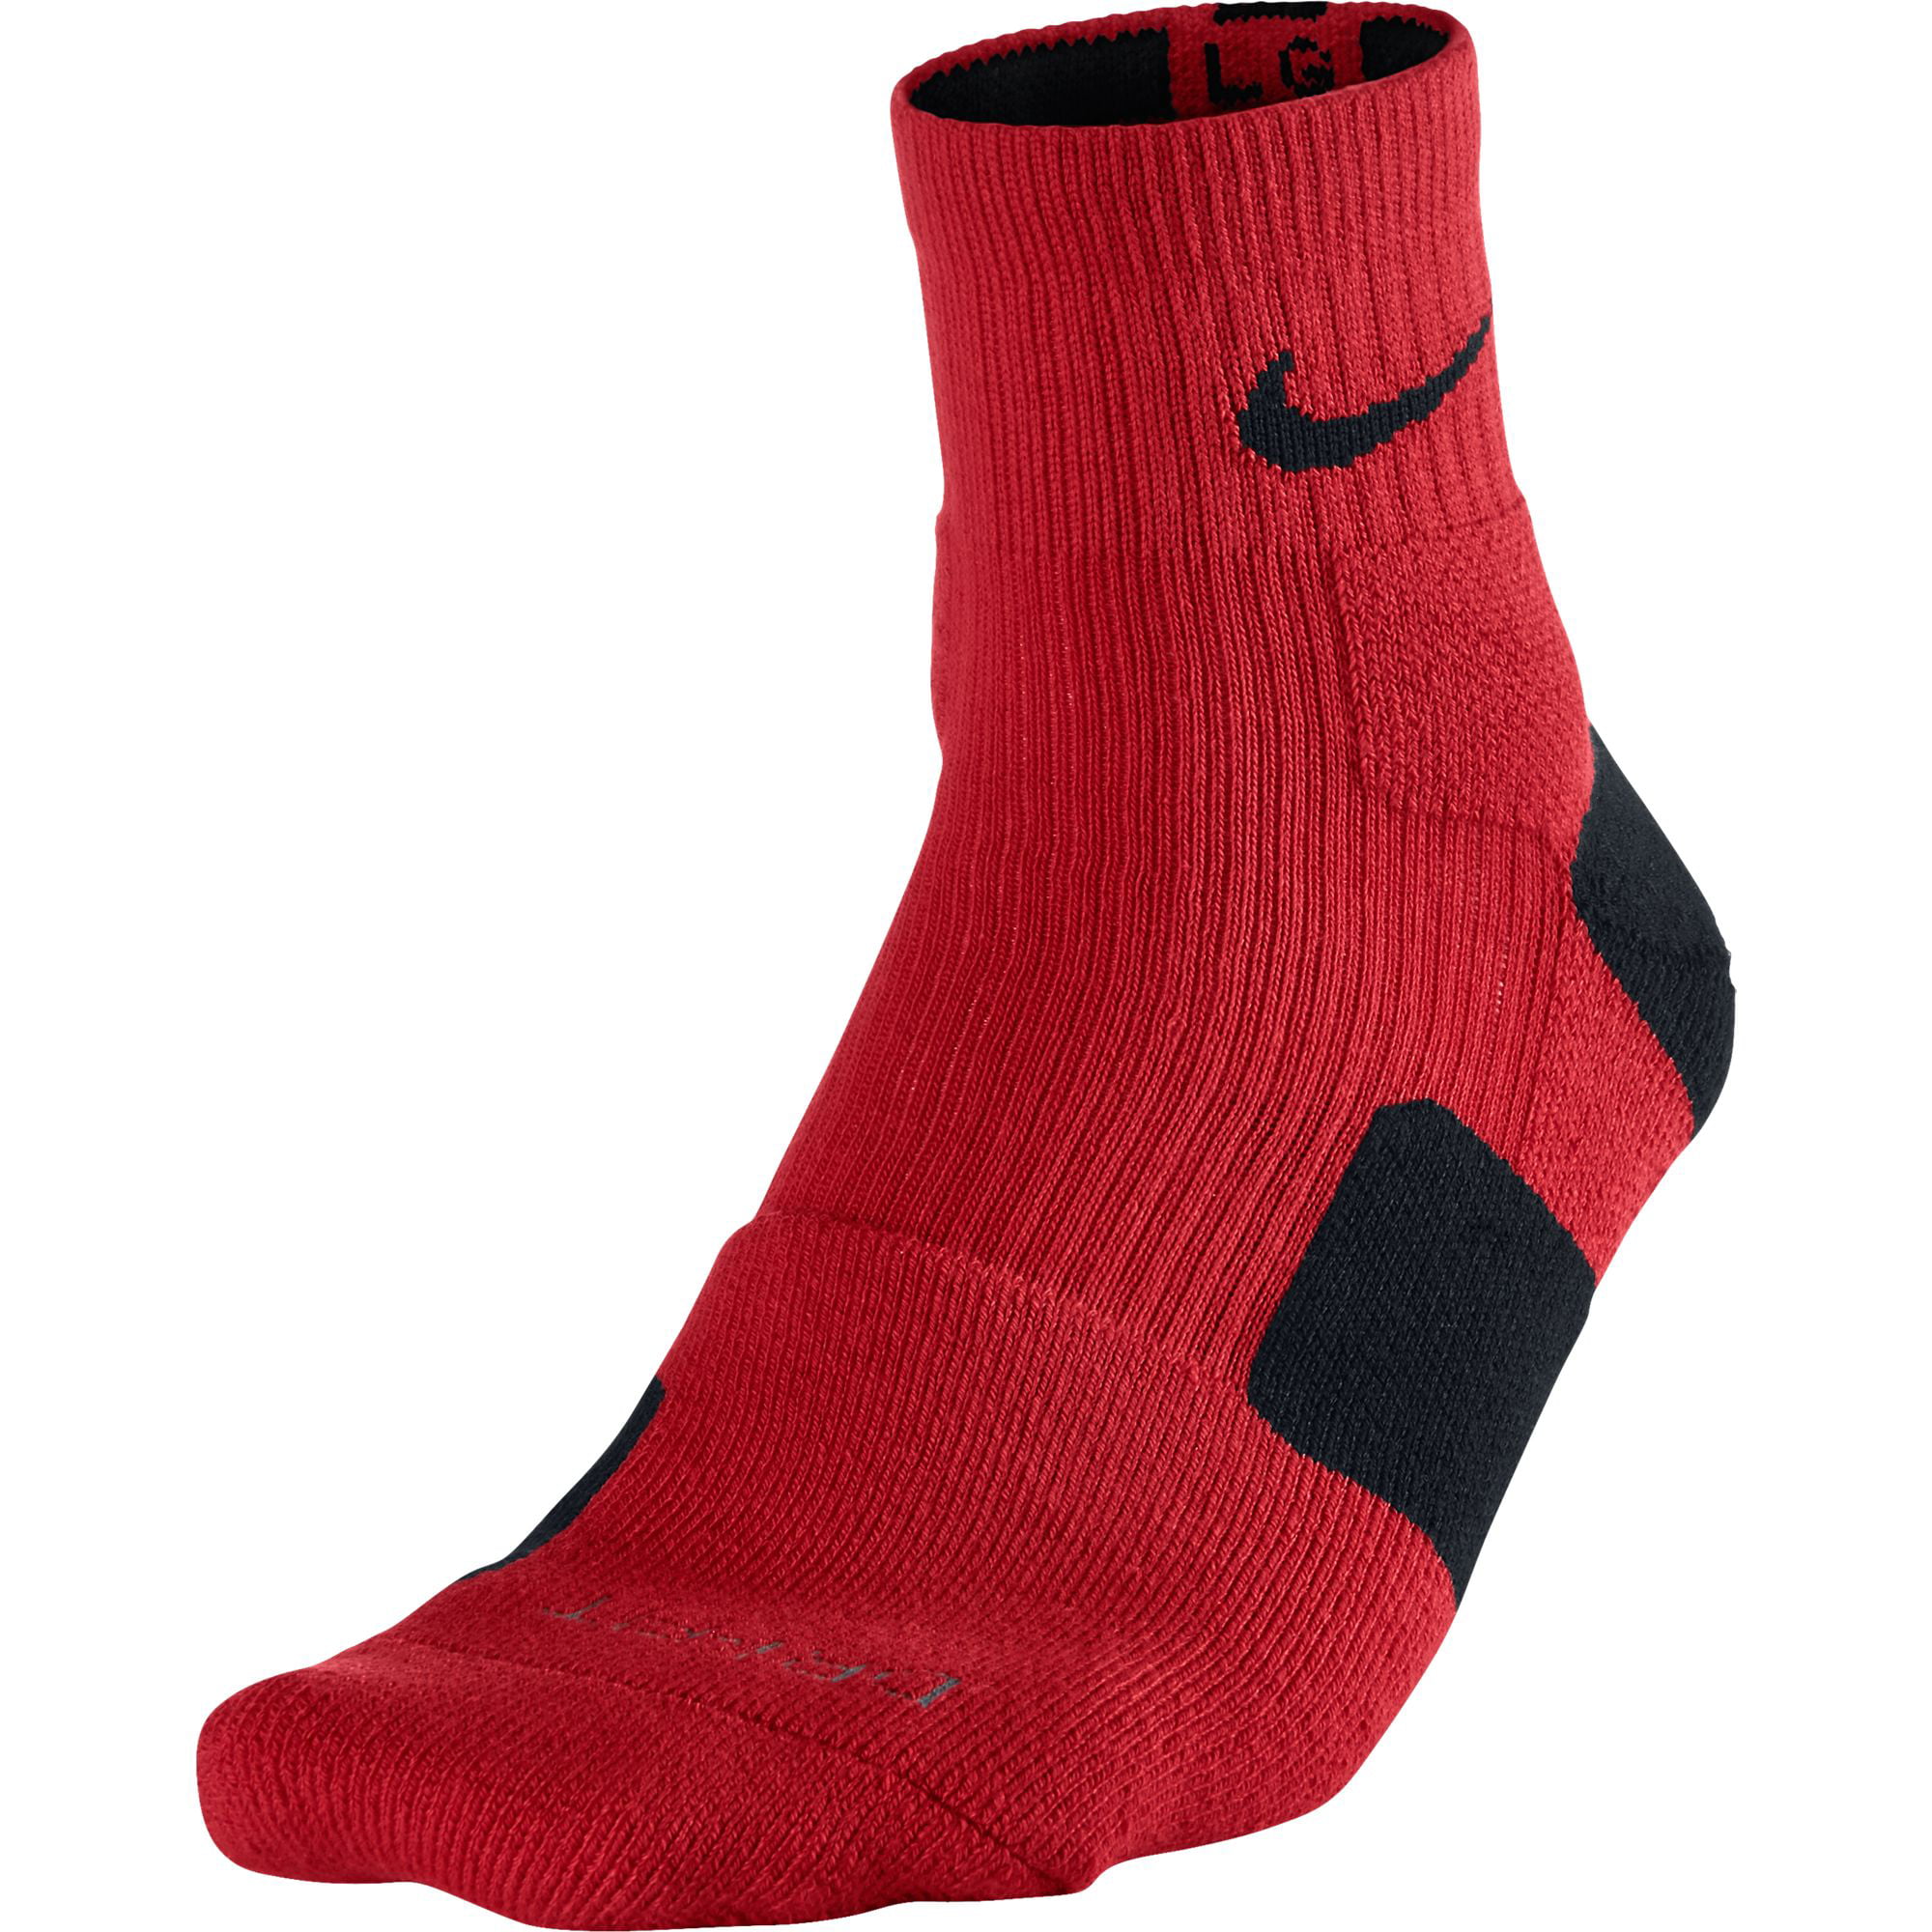 Nike - Nike Elite Cushioned High Quarter Men's Socks Red/Black sx3718 nike elite socks red white blue